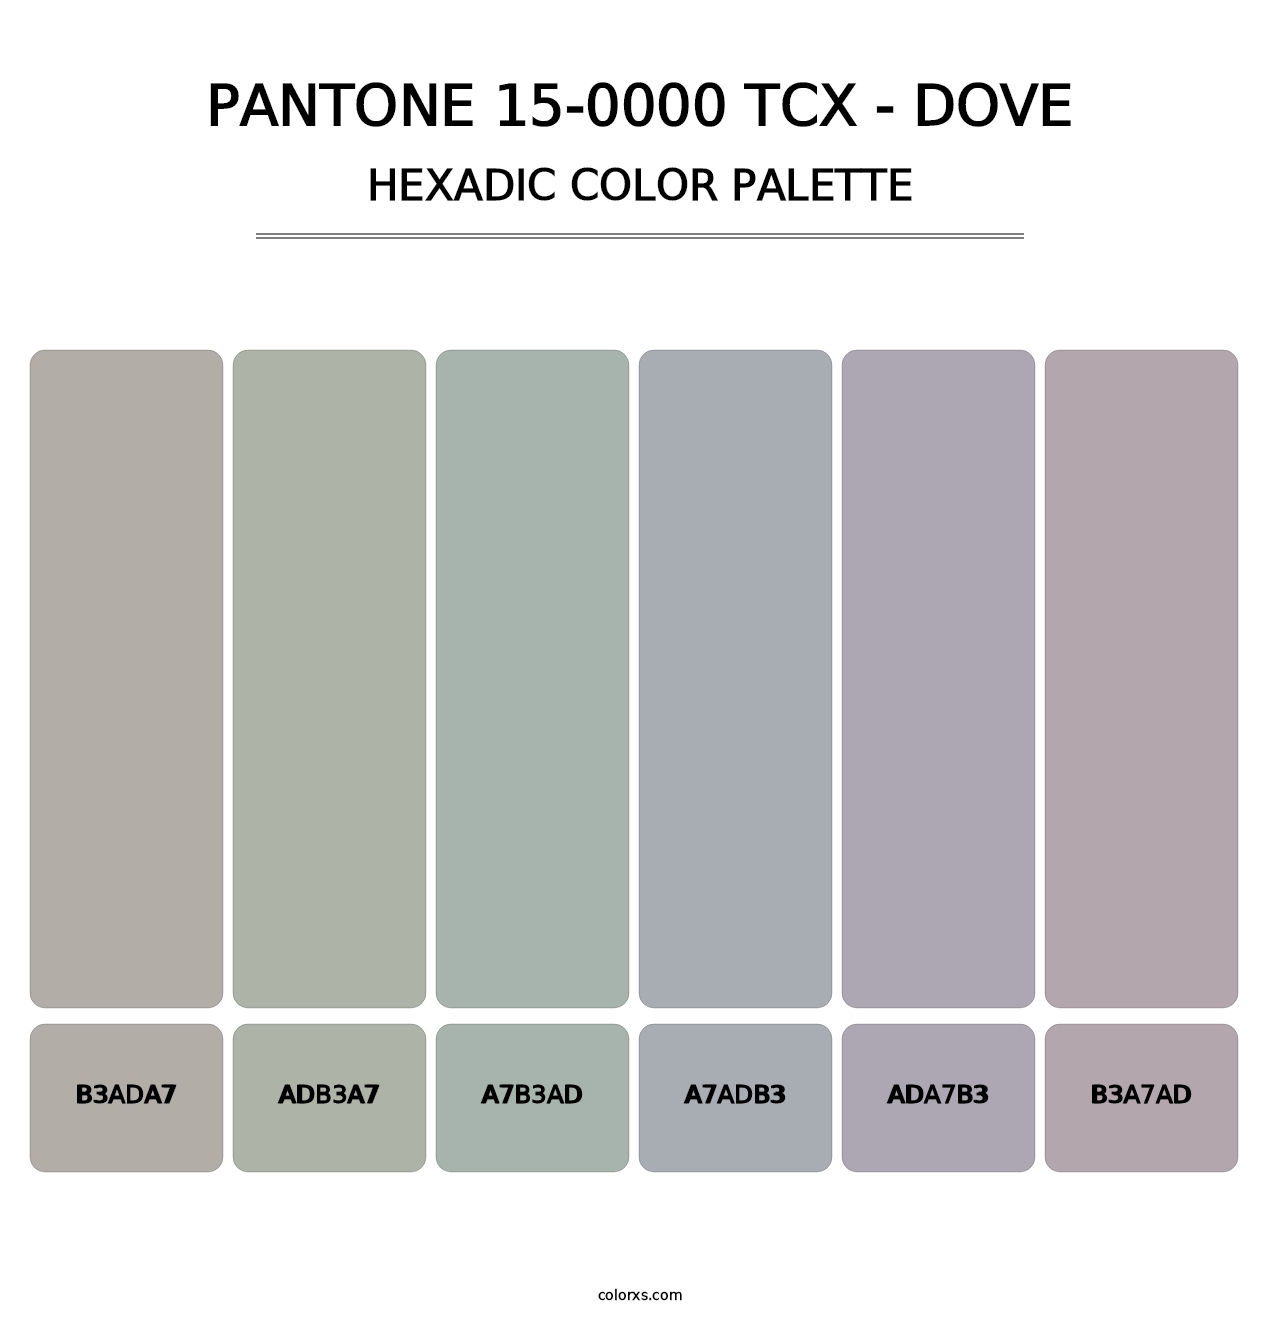 PANTONE 15-0000 TCX - Dove - Hexadic Color Palette